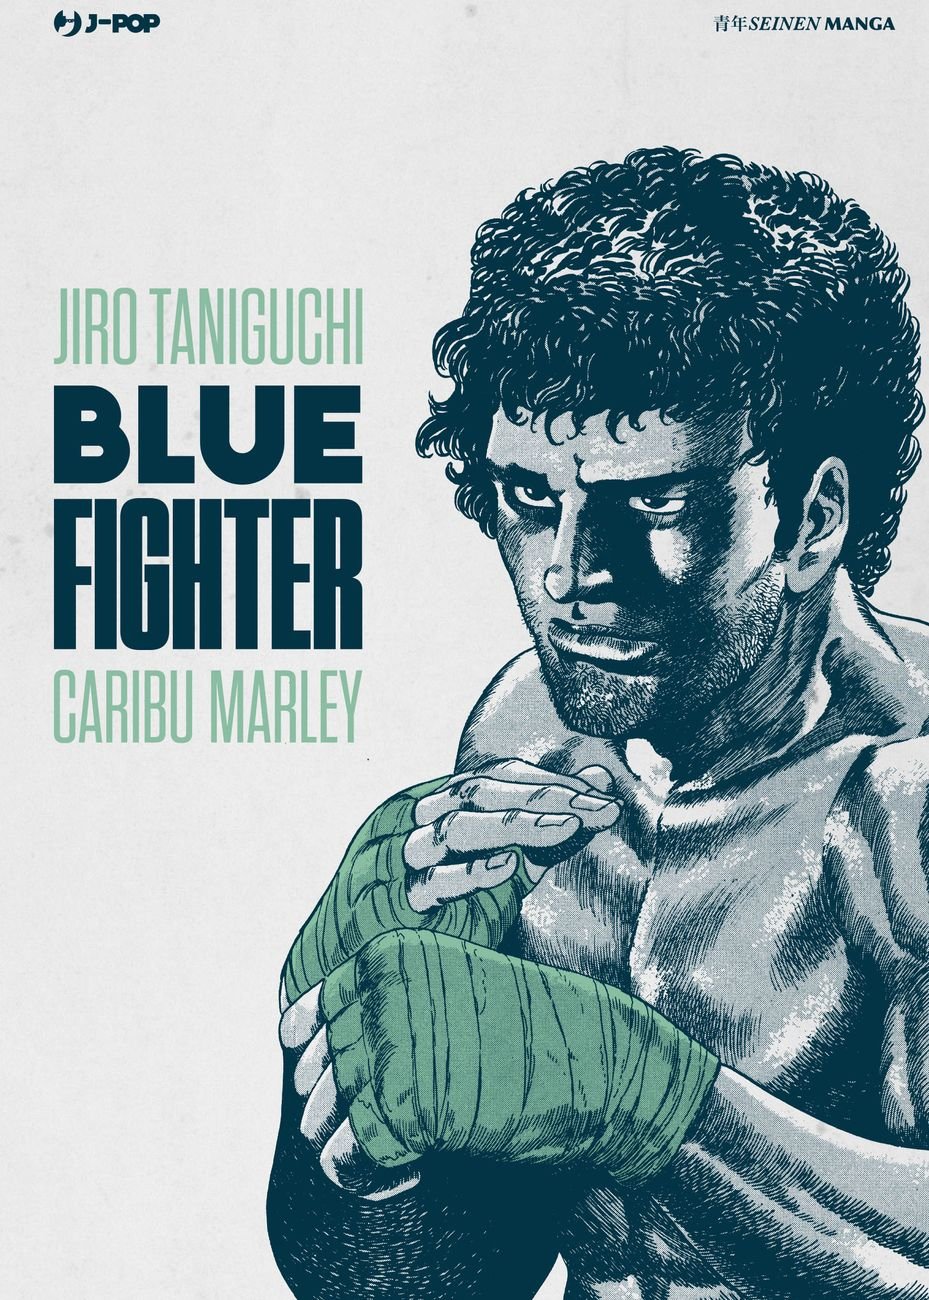 Jiro Taniguchi – Blue Fighter (J-POP Manga, Milano 2018). Copertina